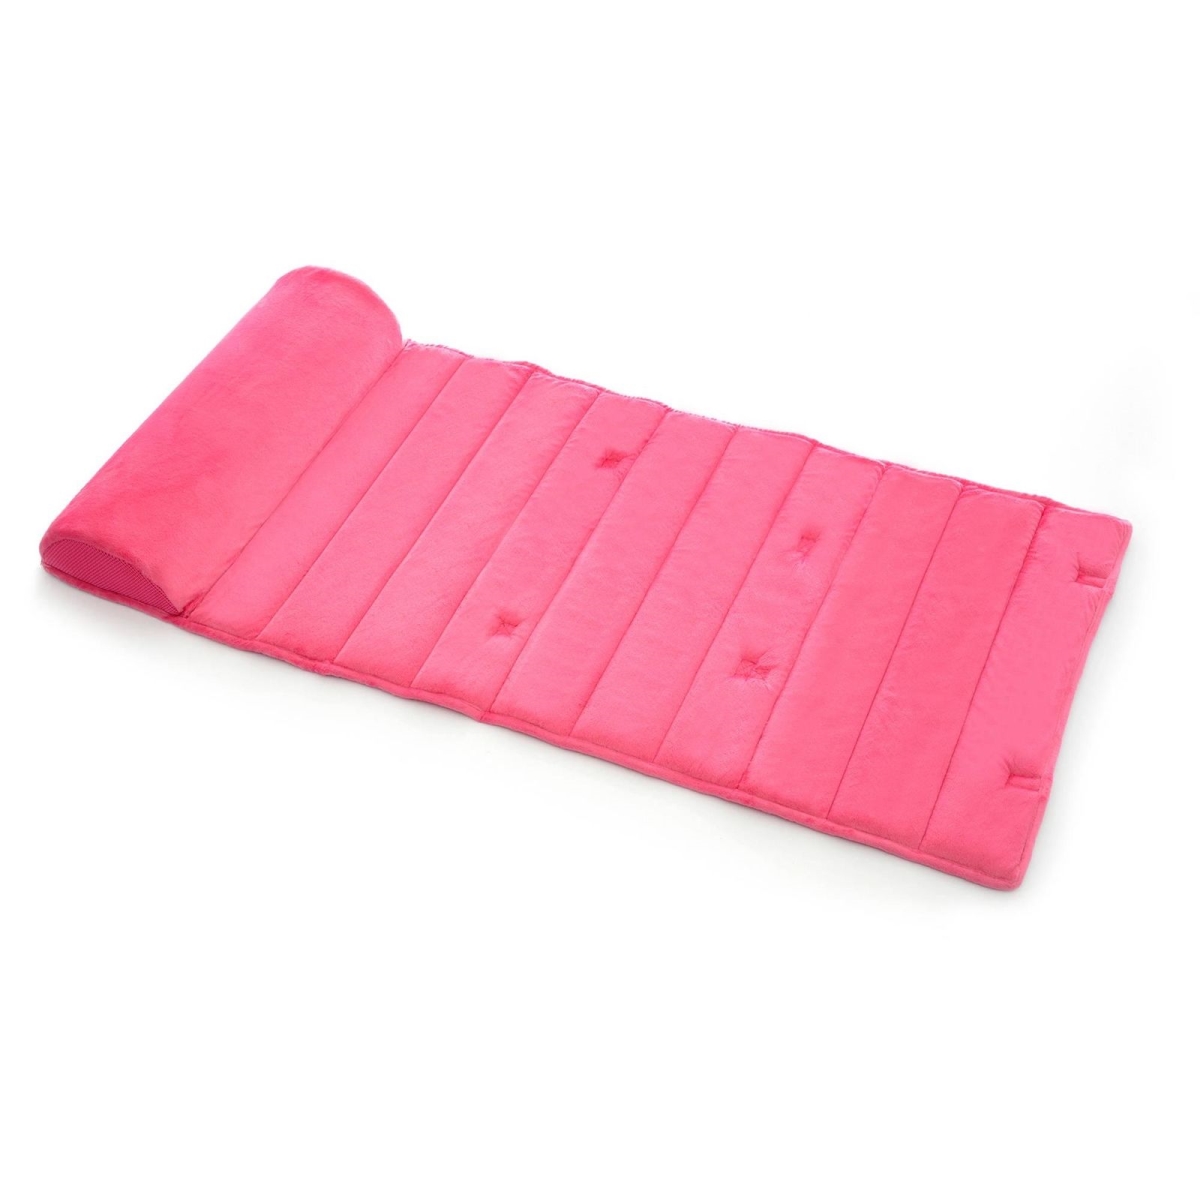 My First Mattress Nm-mfgp55-04 Memory Foam Nap Mat With Removable Pillow, Pink